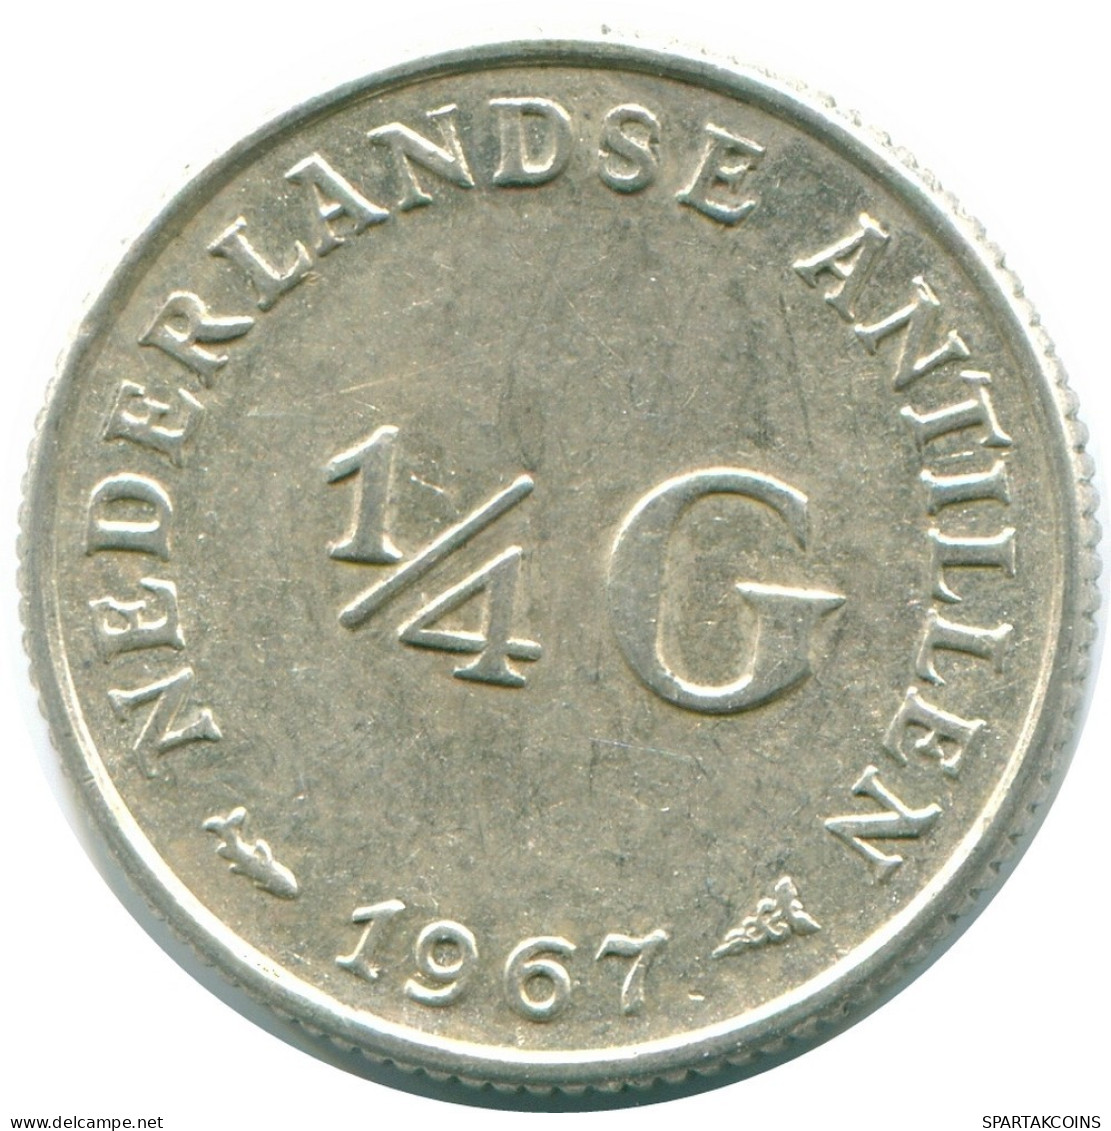 1/4 GULDEN 1967 NIEDERLÄNDISCHE ANTILLEN SILBER Koloniale Münze #NL11471.4.D.A - Netherlands Antilles